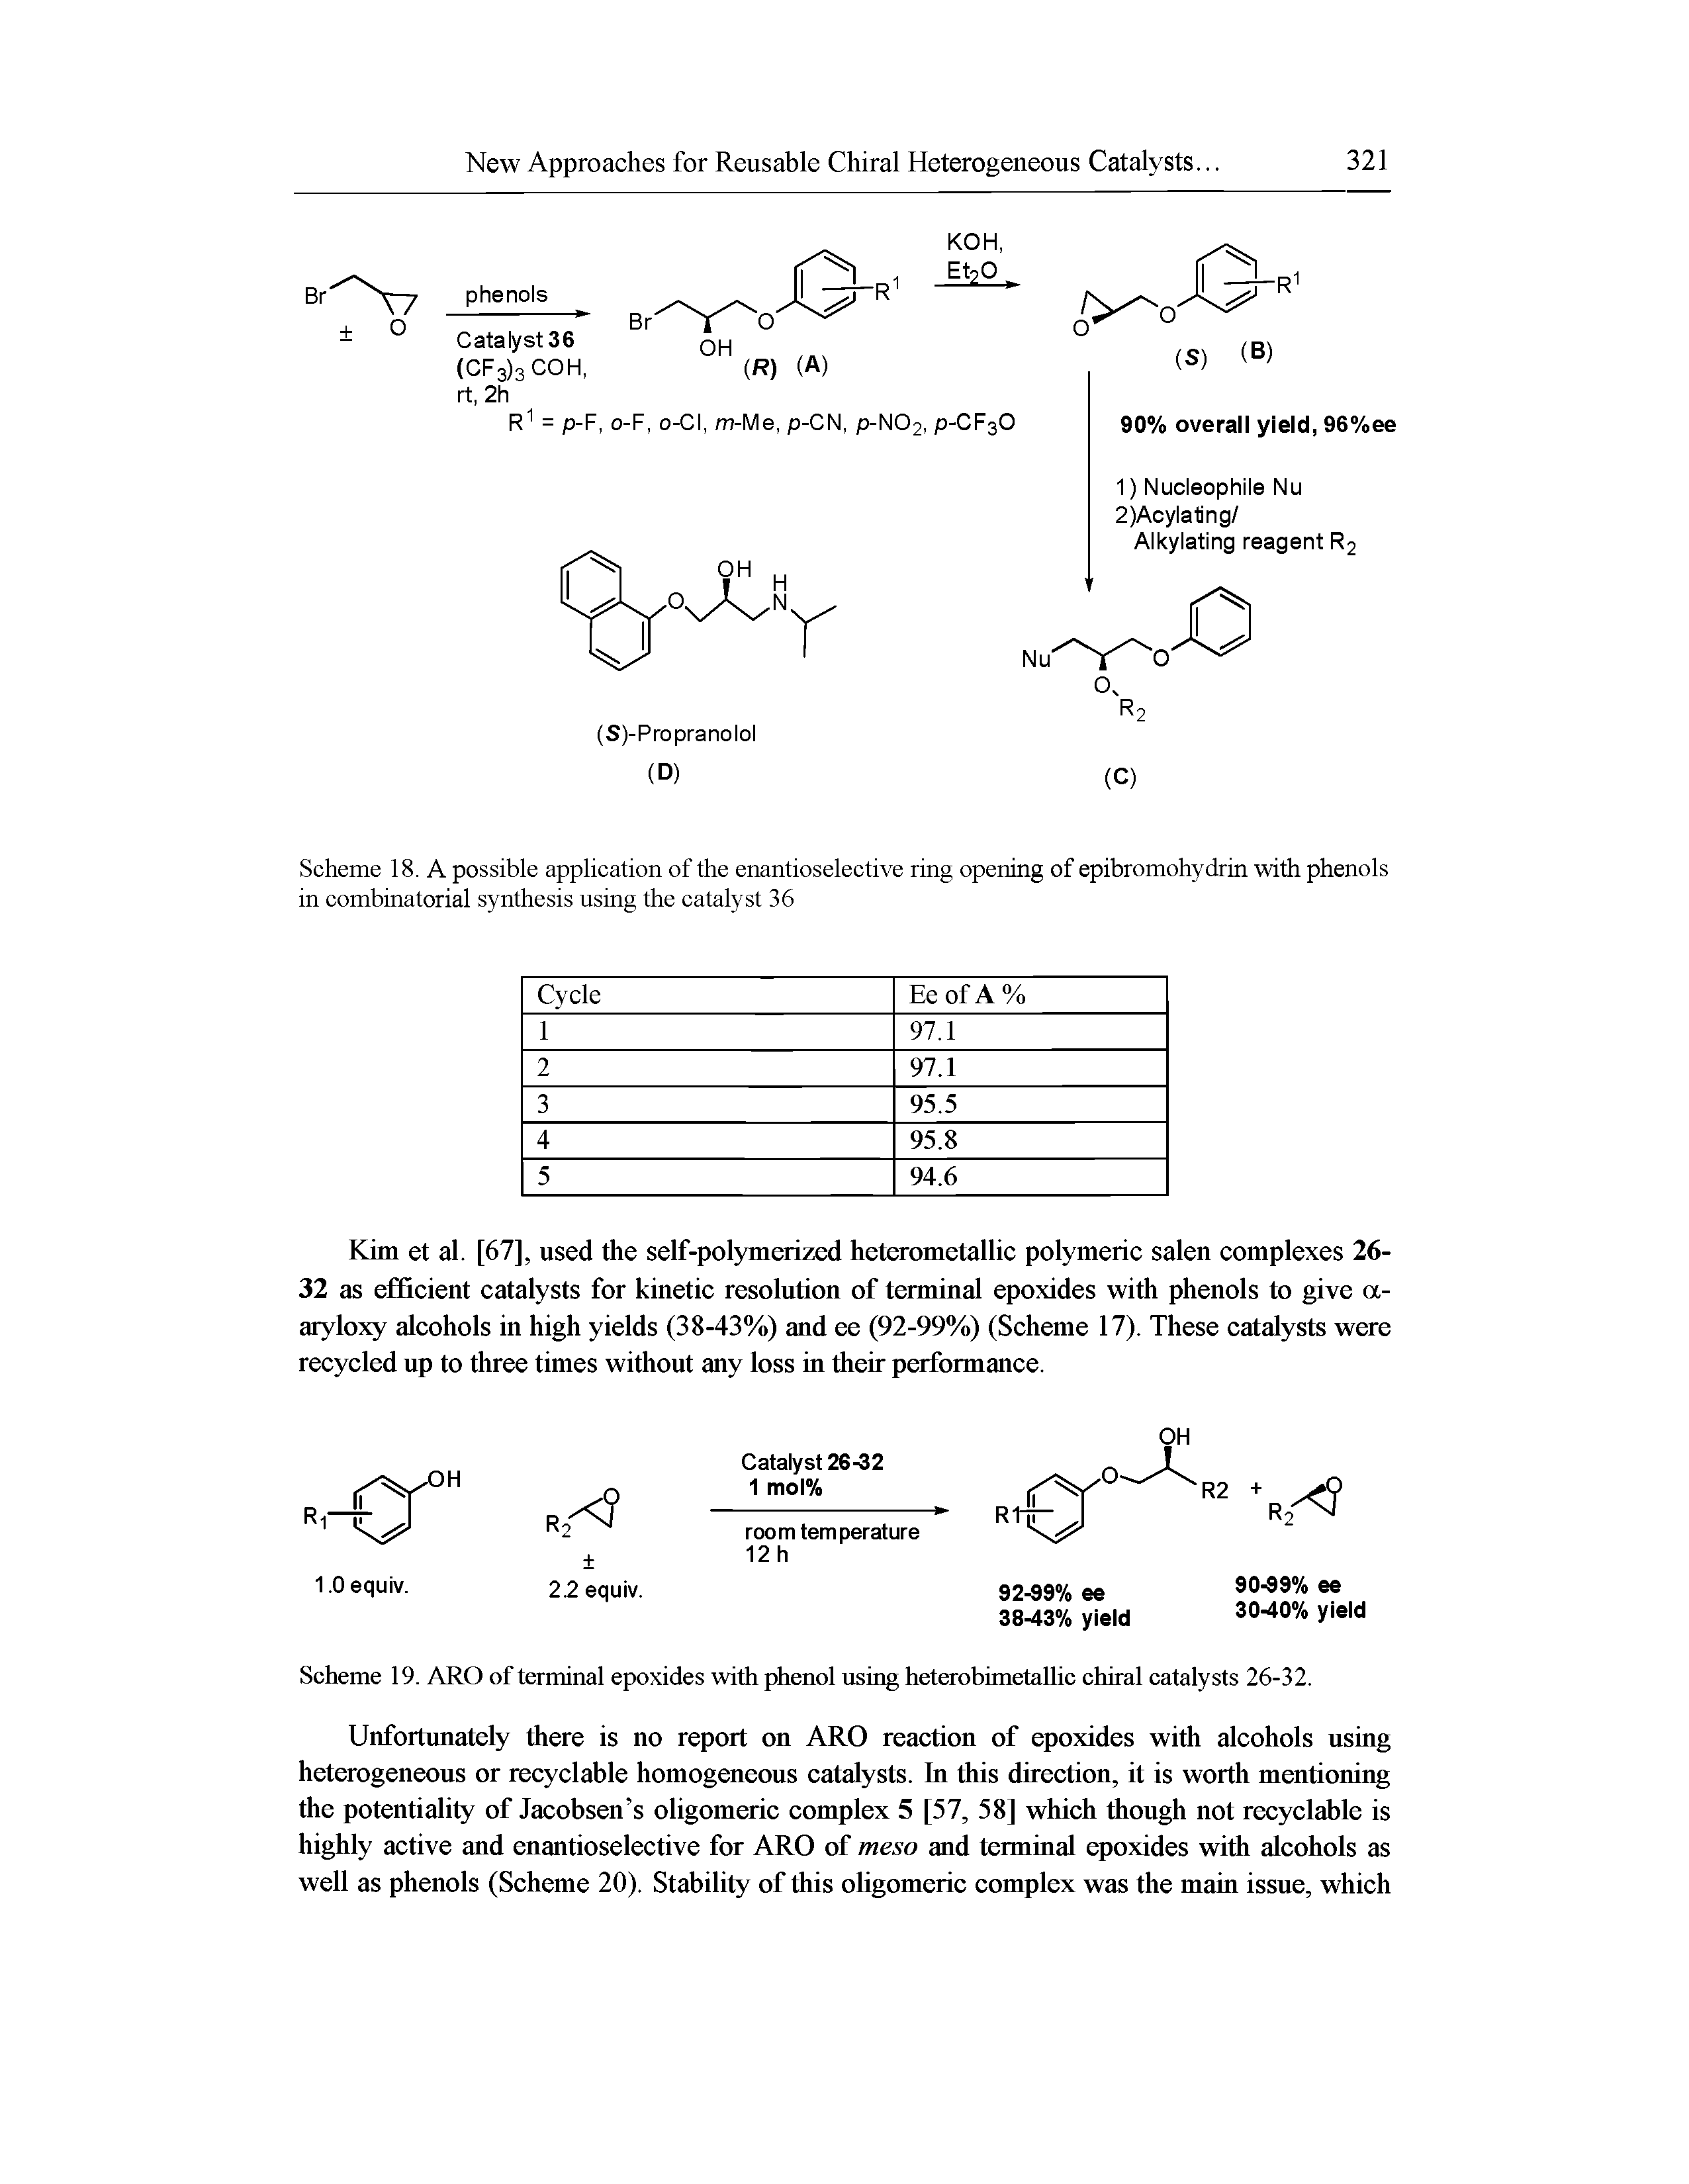 Scheme 19. ARO of terminal epoxides with phenol using heterobimetallic chiral catalysts 26-32.